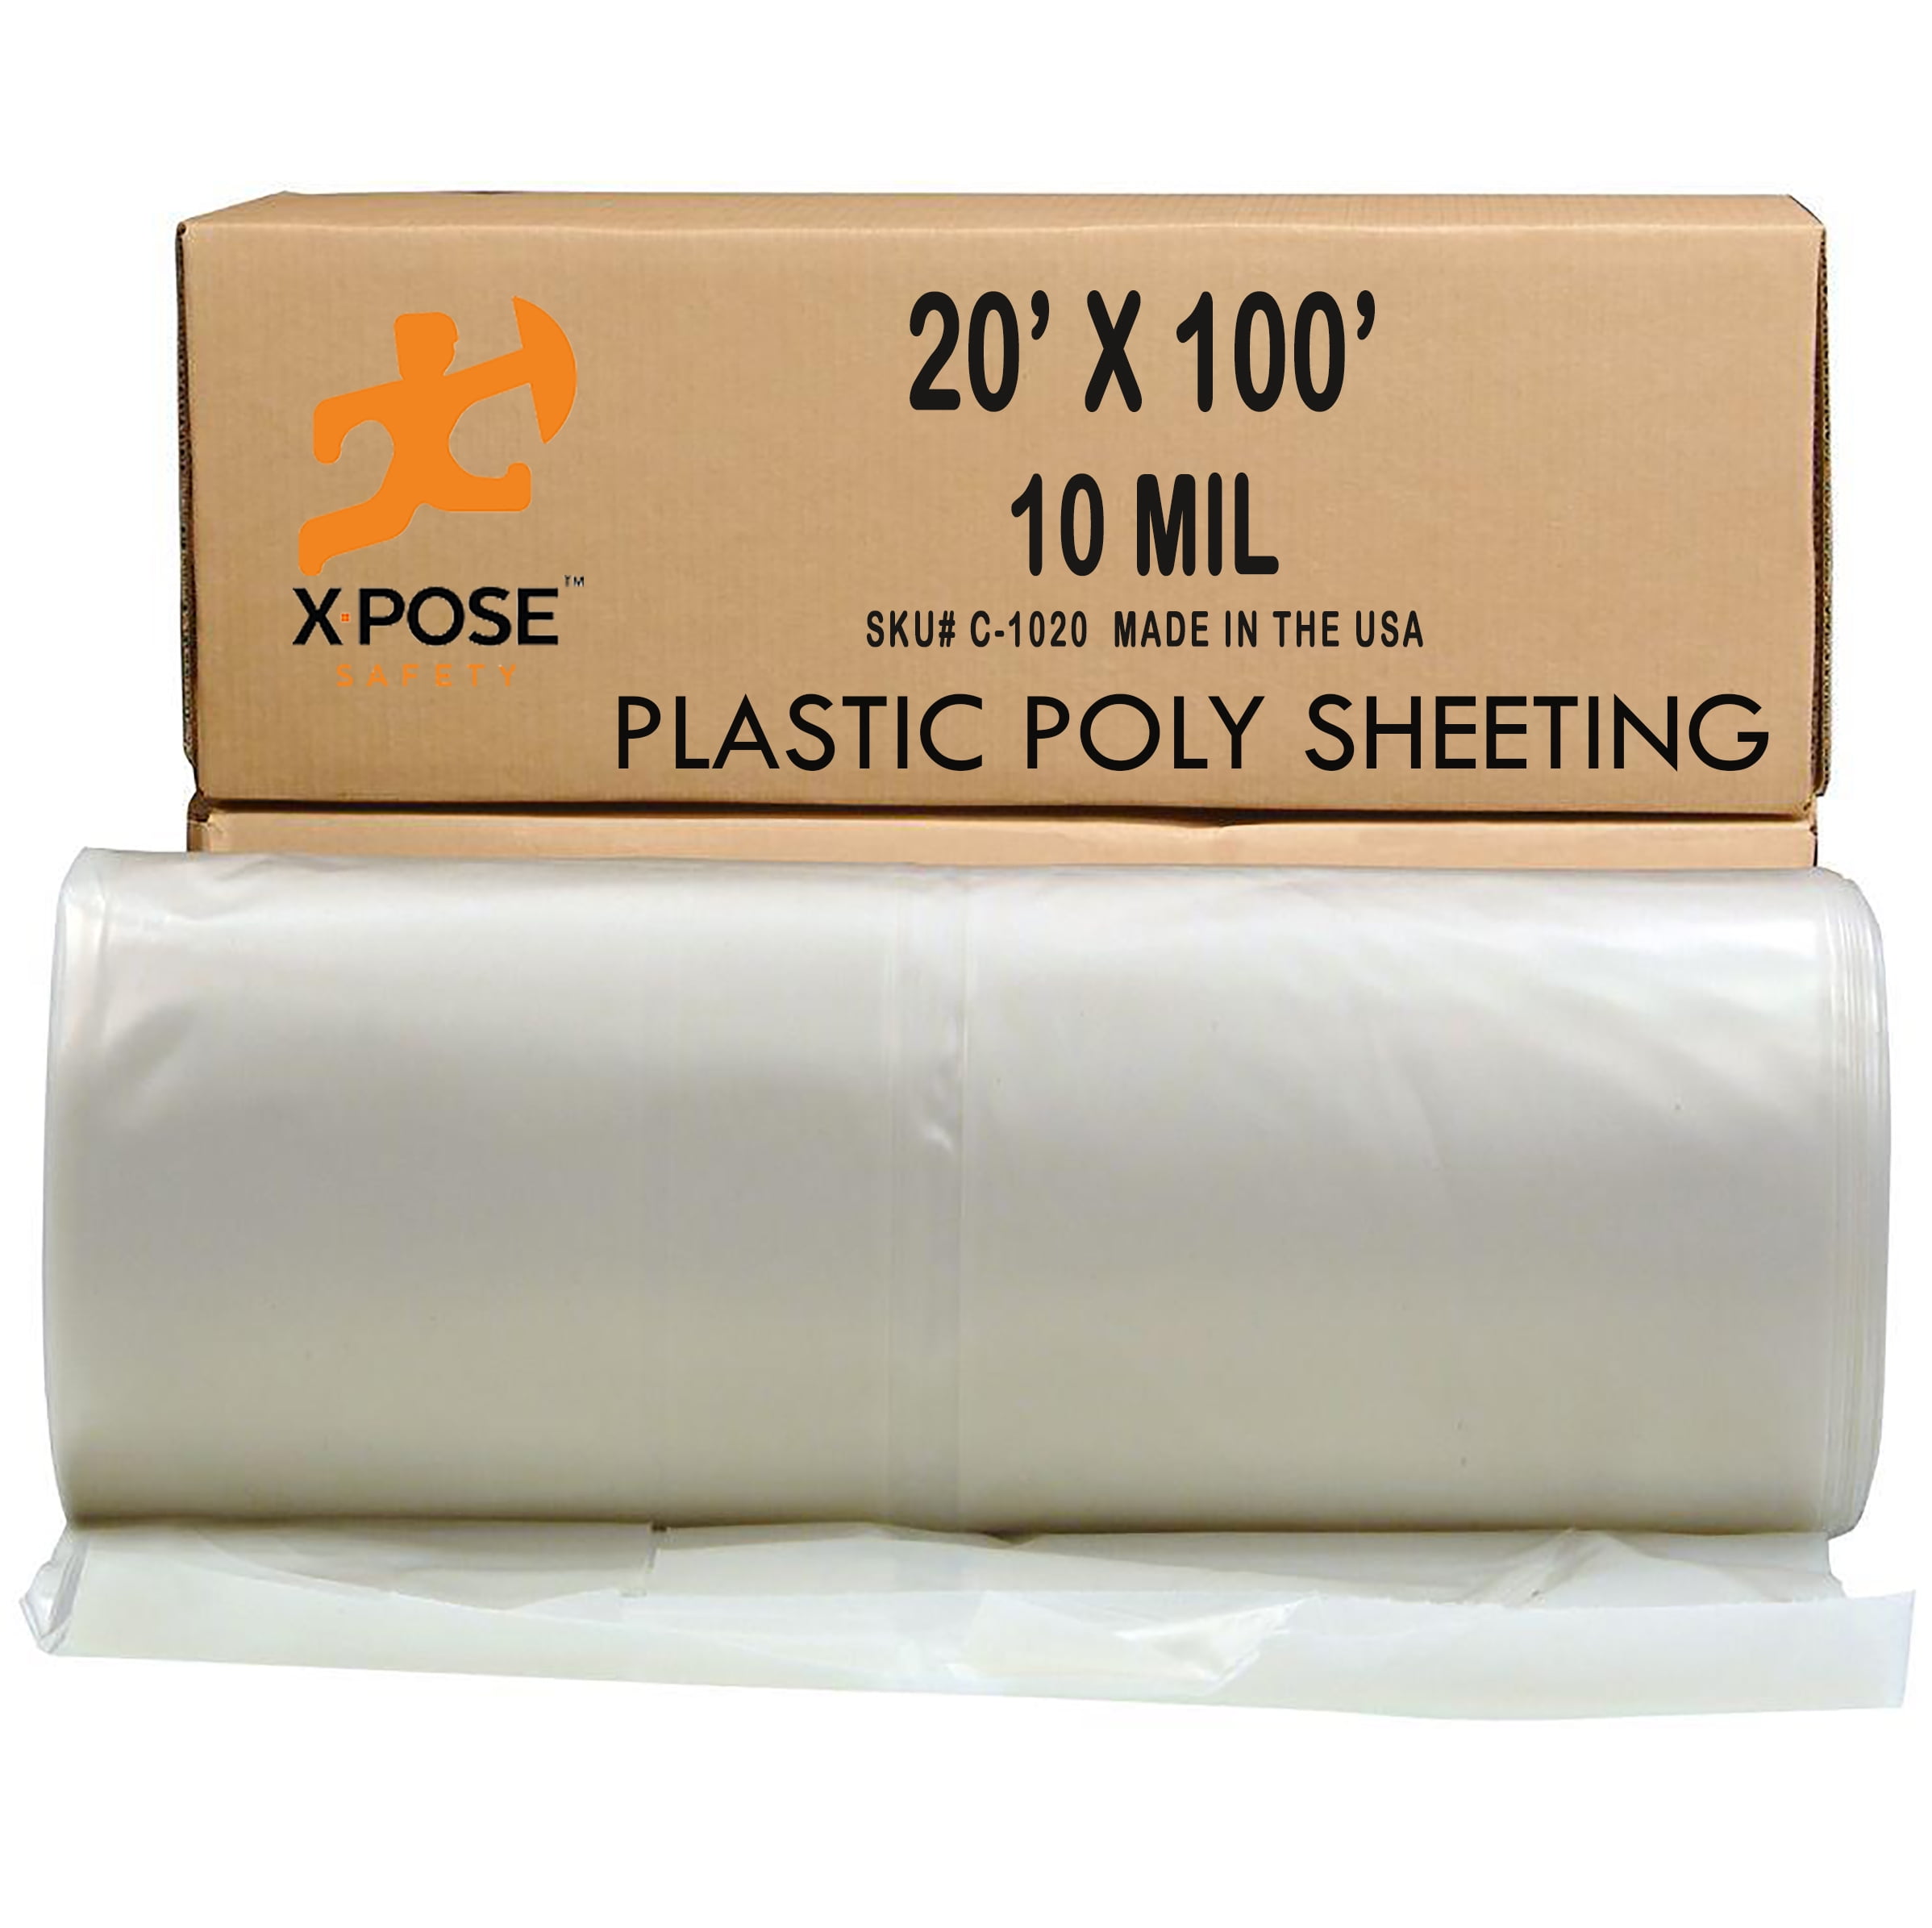 White Flame Retardant Poly Sheeting Roll 20' x 100' x 6 Mil by TheSafetyHouse 